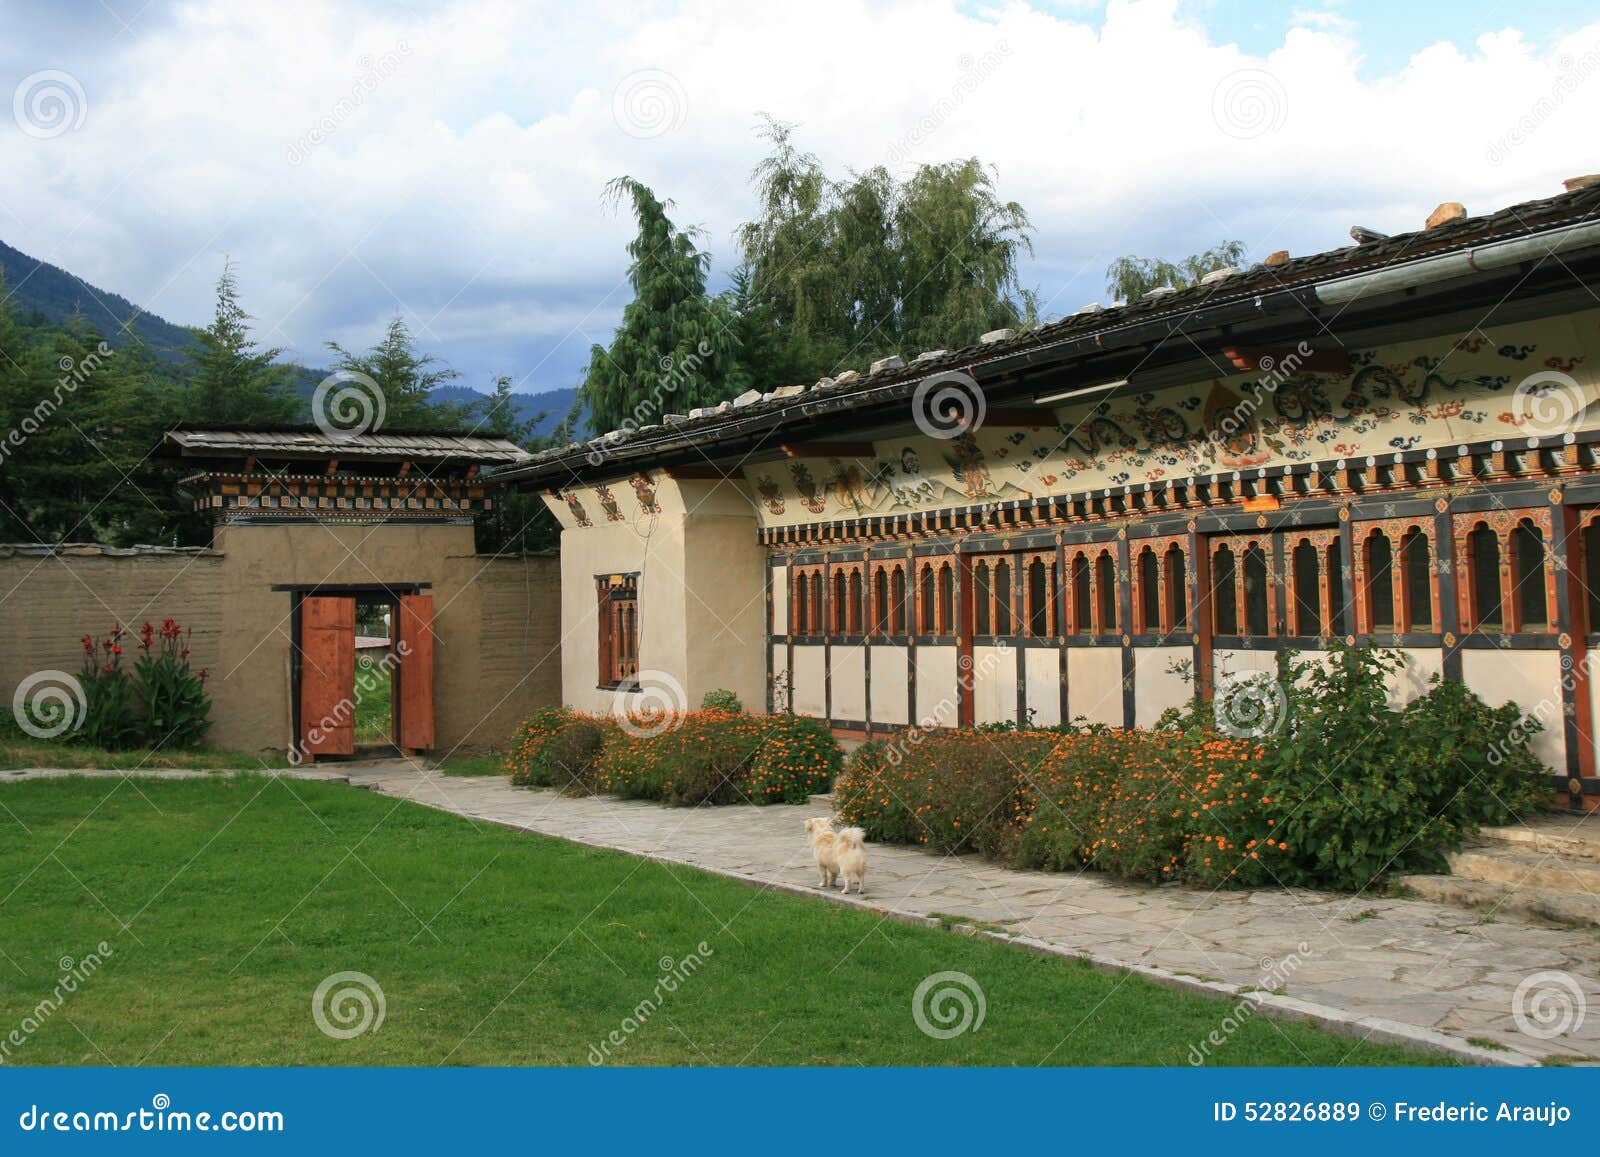 folk heritage museum - thimphu - bhutan